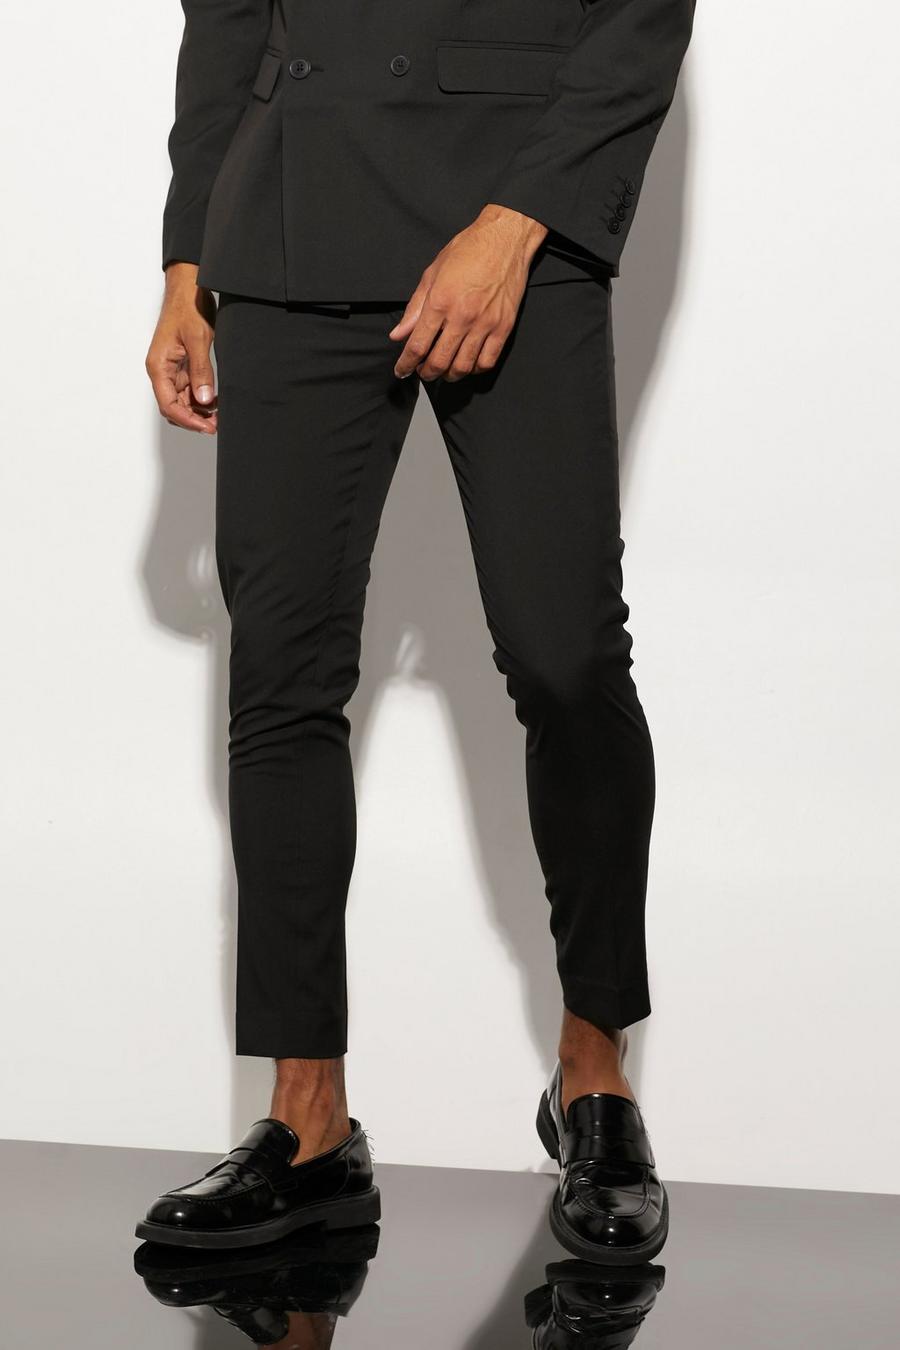 Pantaloni completo Super Skinny Fit, Black nero